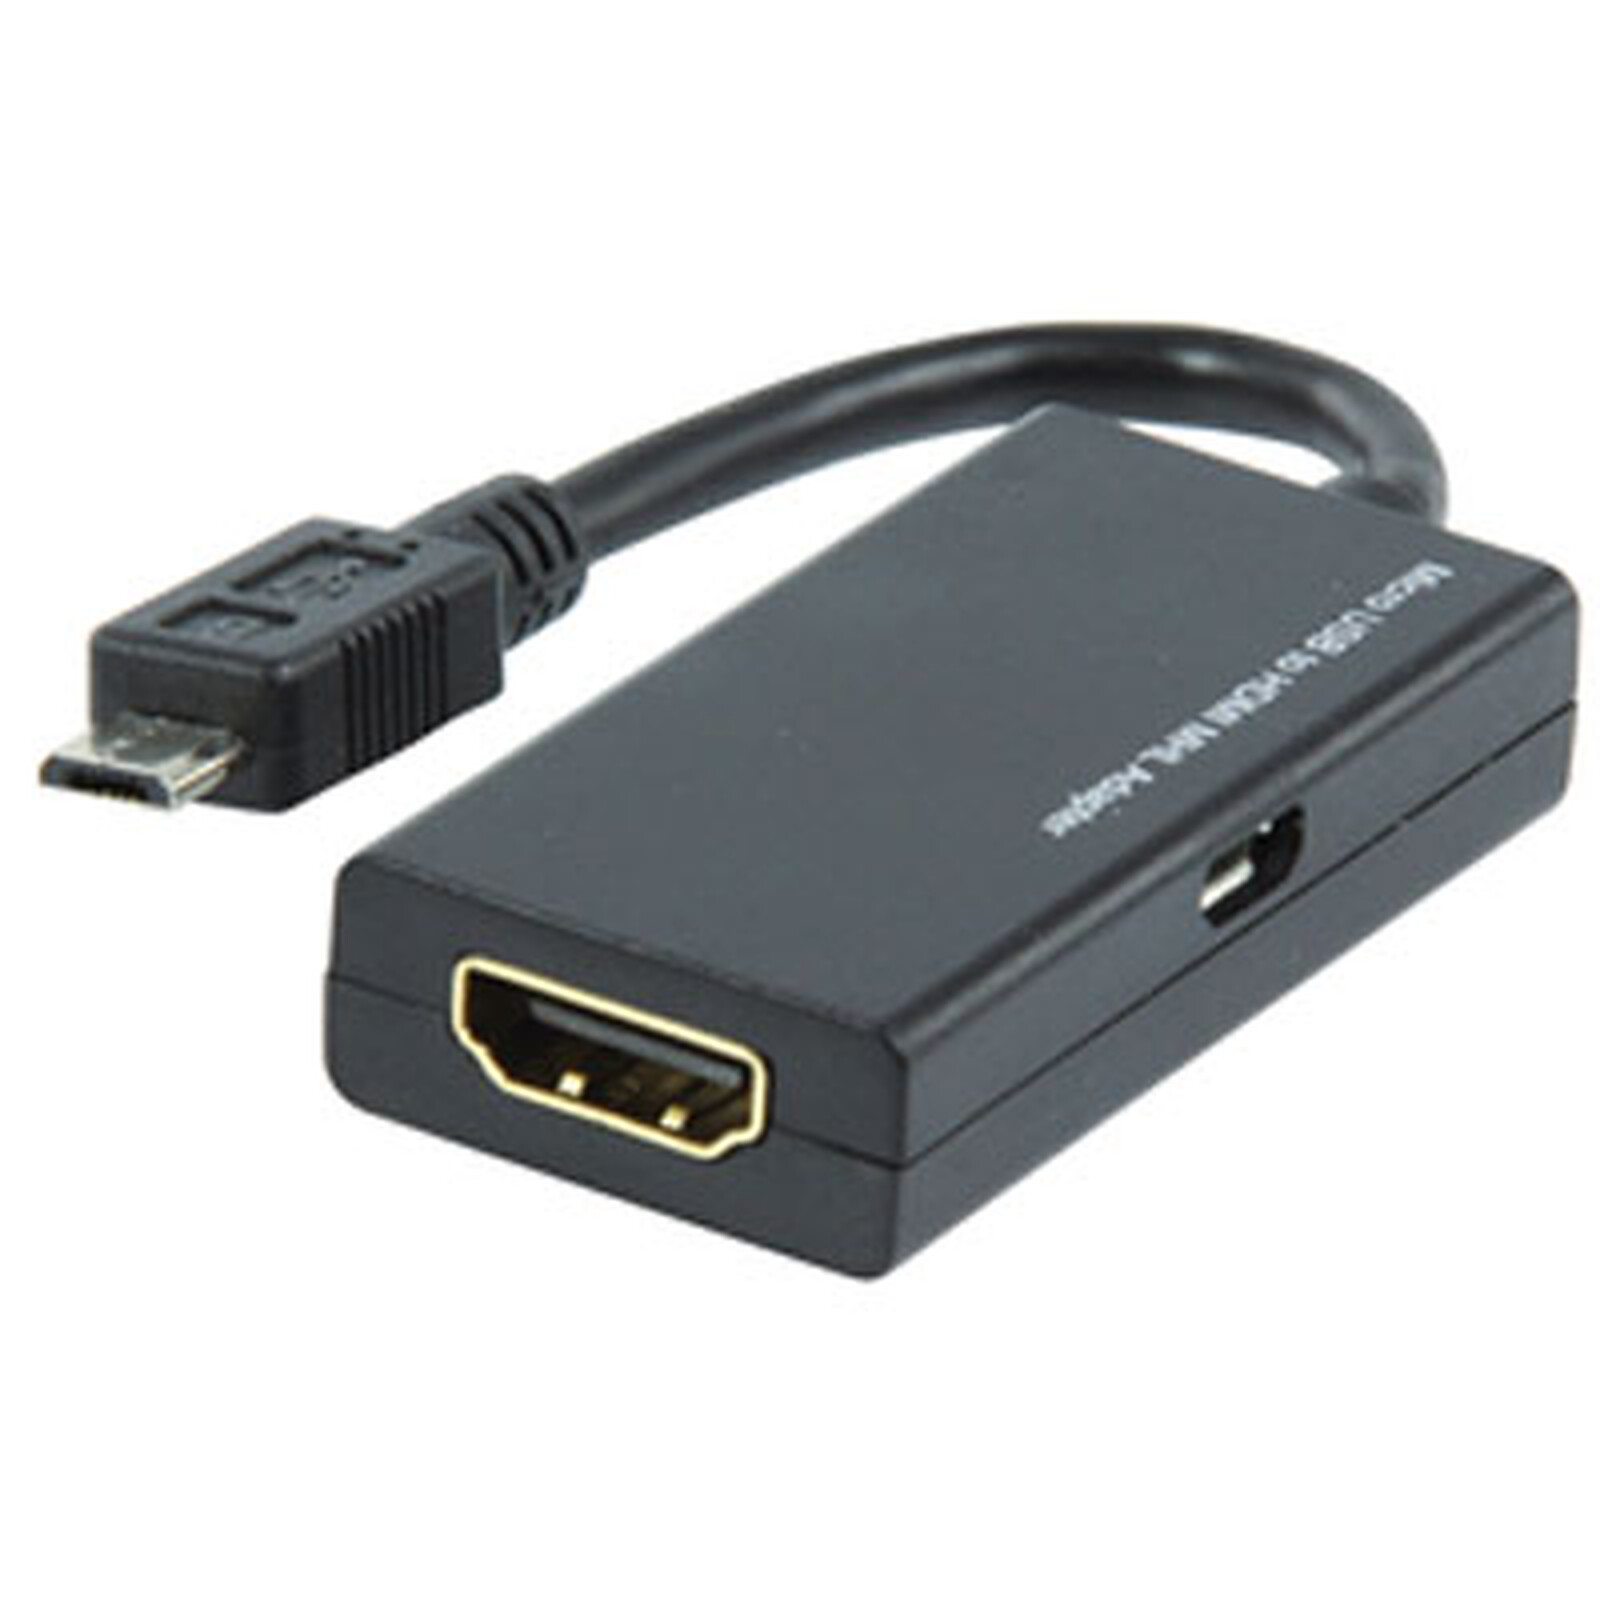 Usb разъем телевизора. Micro HDMI для USB порта. Переходник адаптер 50 Pin HDMI USB. Адаптер deppa USB-С to HDMI. Micro USB 3.0 К HDMI MHL адаптер.